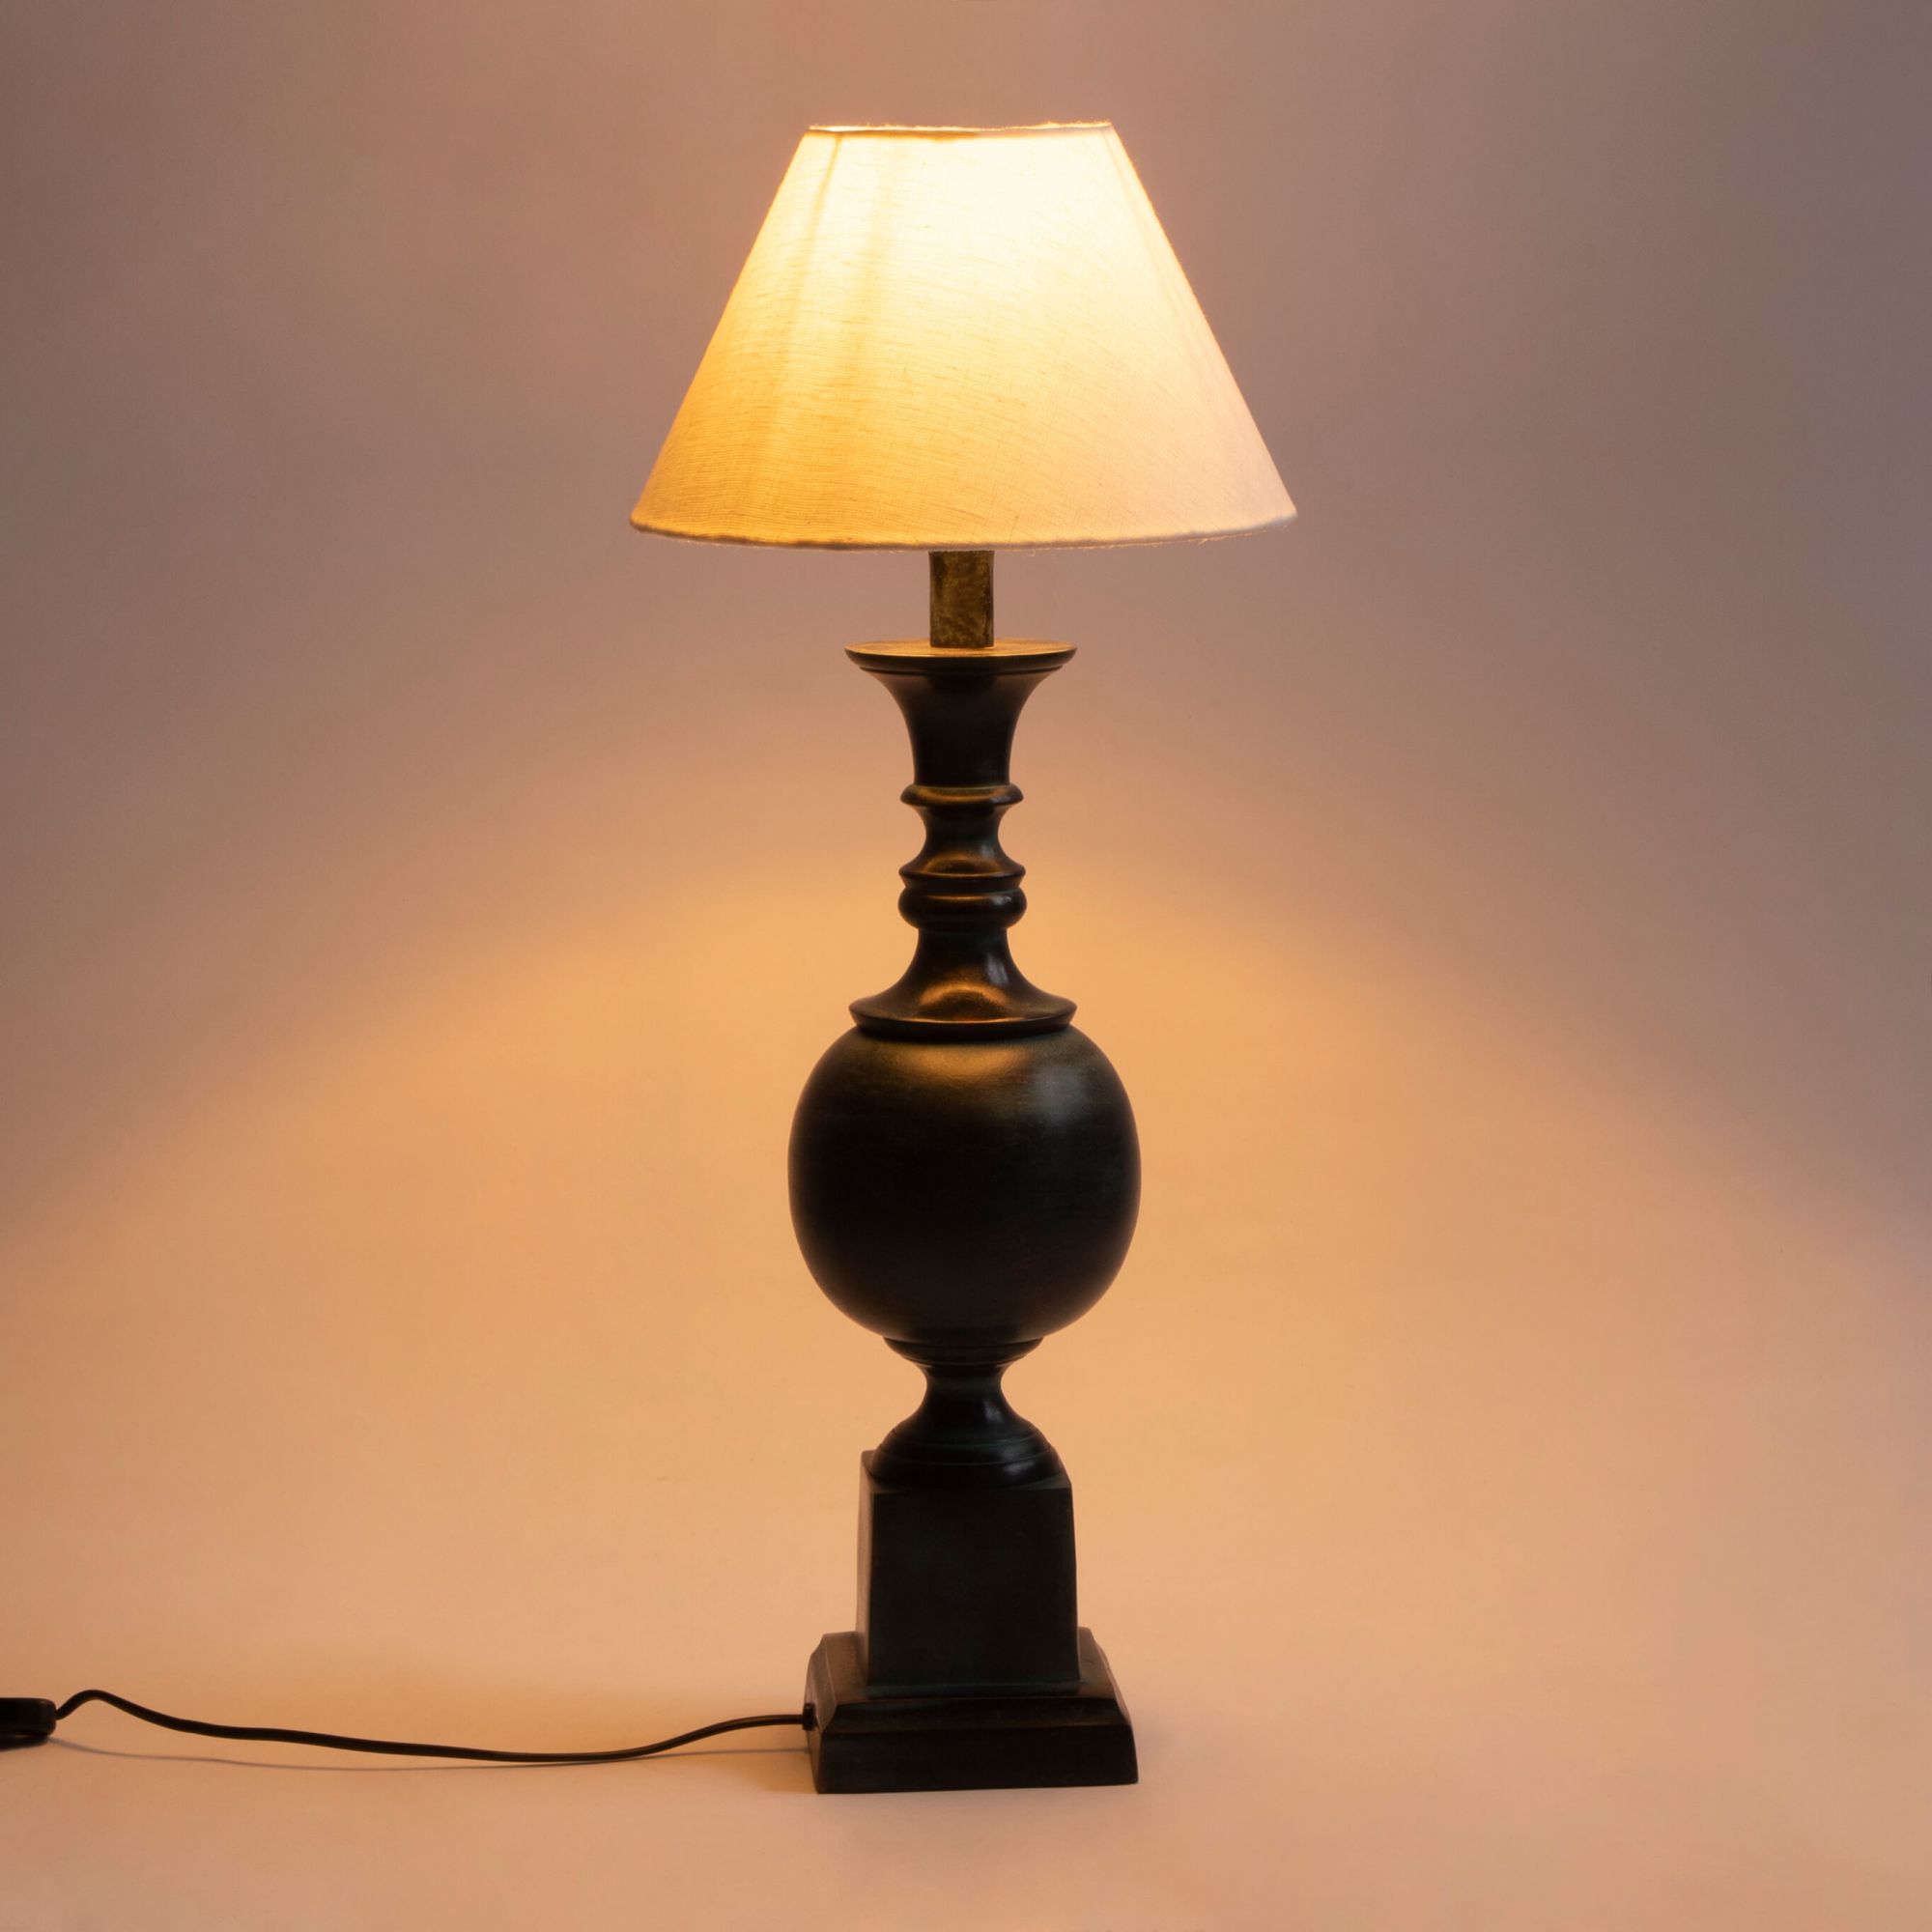 Vintage Baluster Lamp Stand - Green Patina